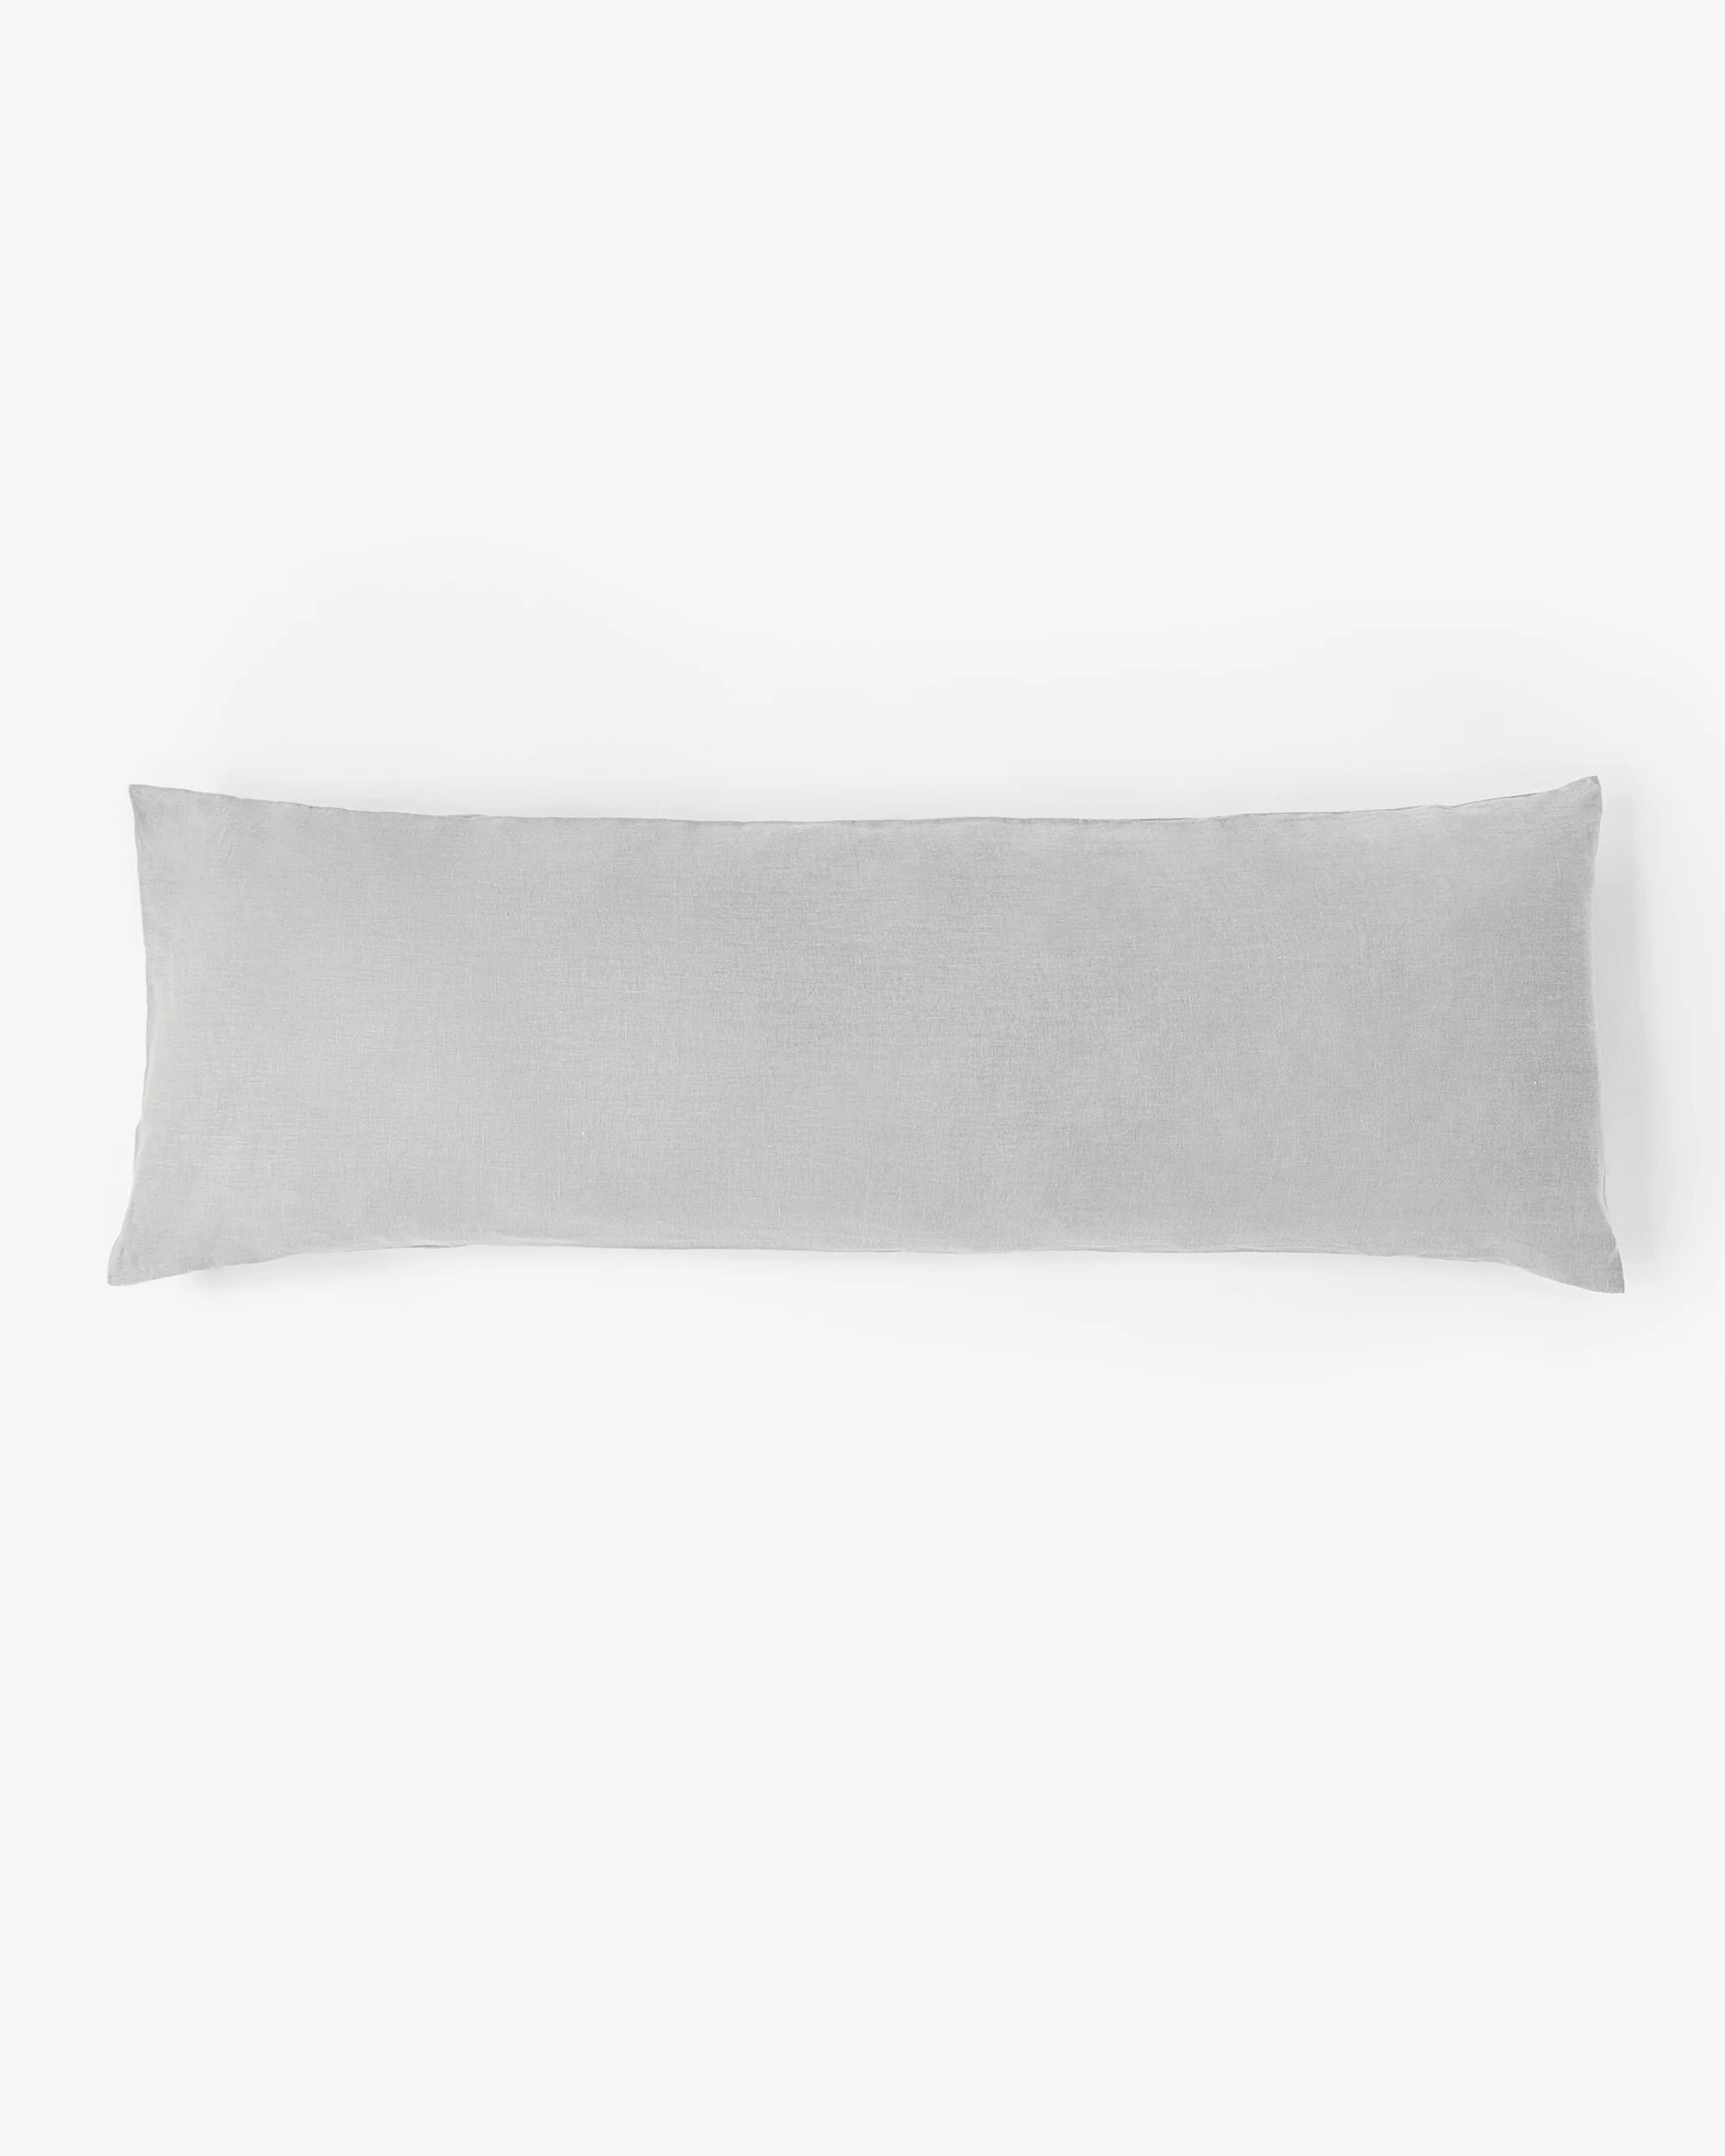 MagicLinen Body pillowcase in Light gray